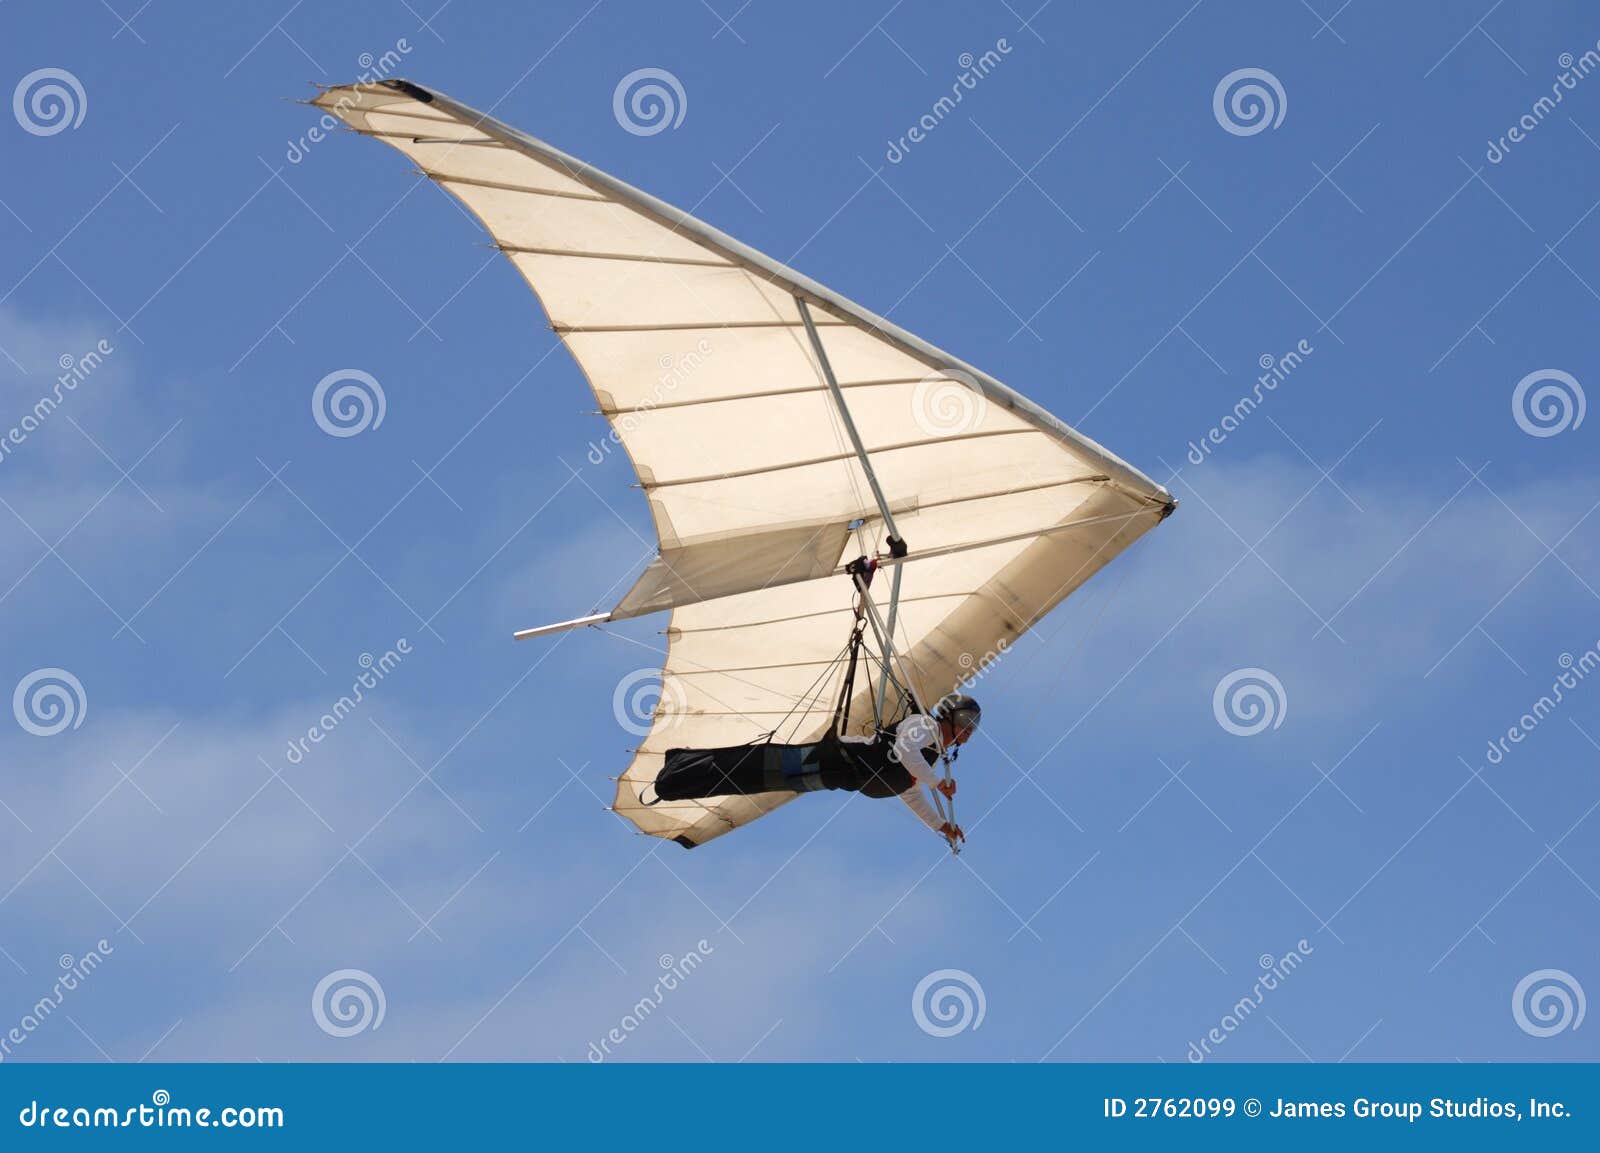 hang gliding